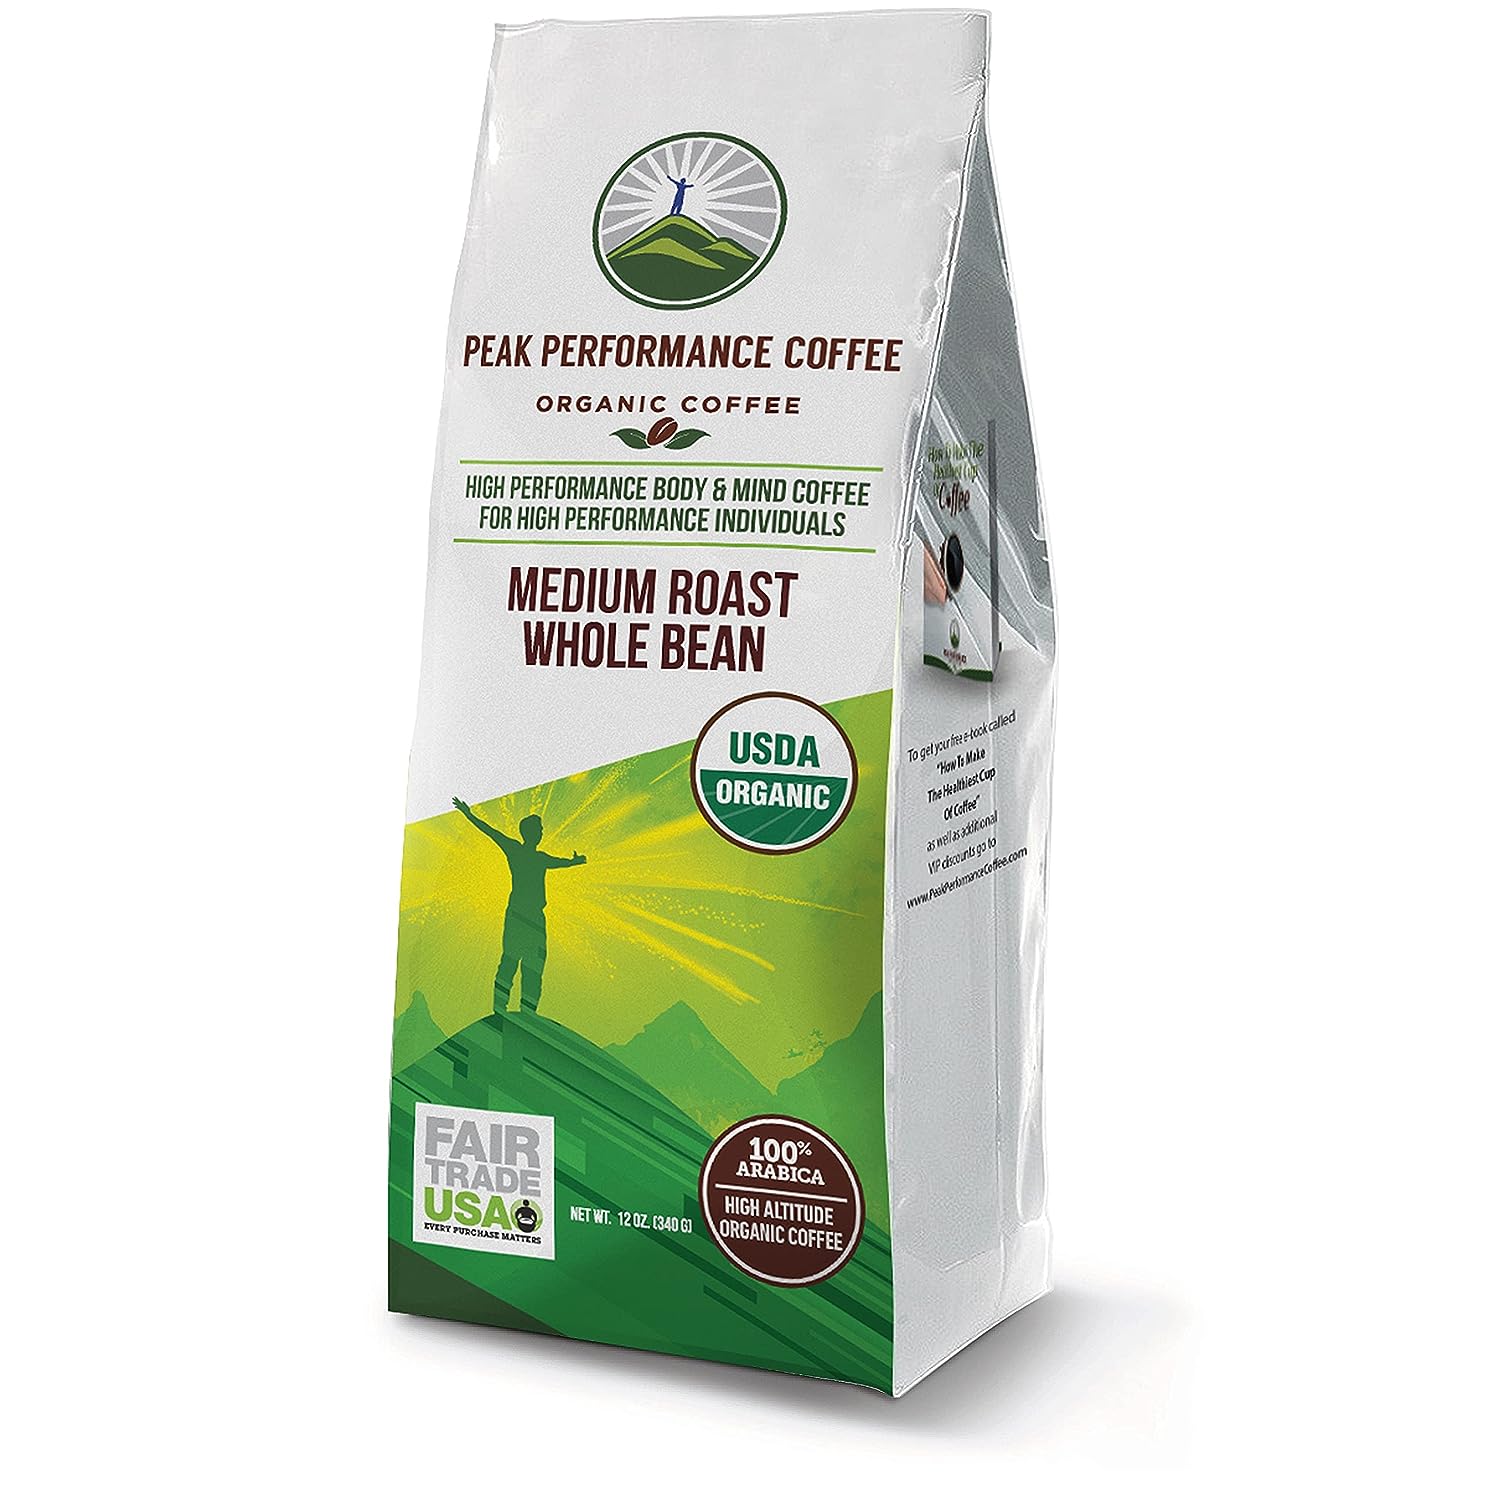 Peak Performance High Altitude Organic Coffee. Fair Trade, Low Acid, Non GMO, and Beans Full Of Antioxidants! Medium Roast Smooth Tasting USDA Certified Organic Whole Bean Coffee Bag